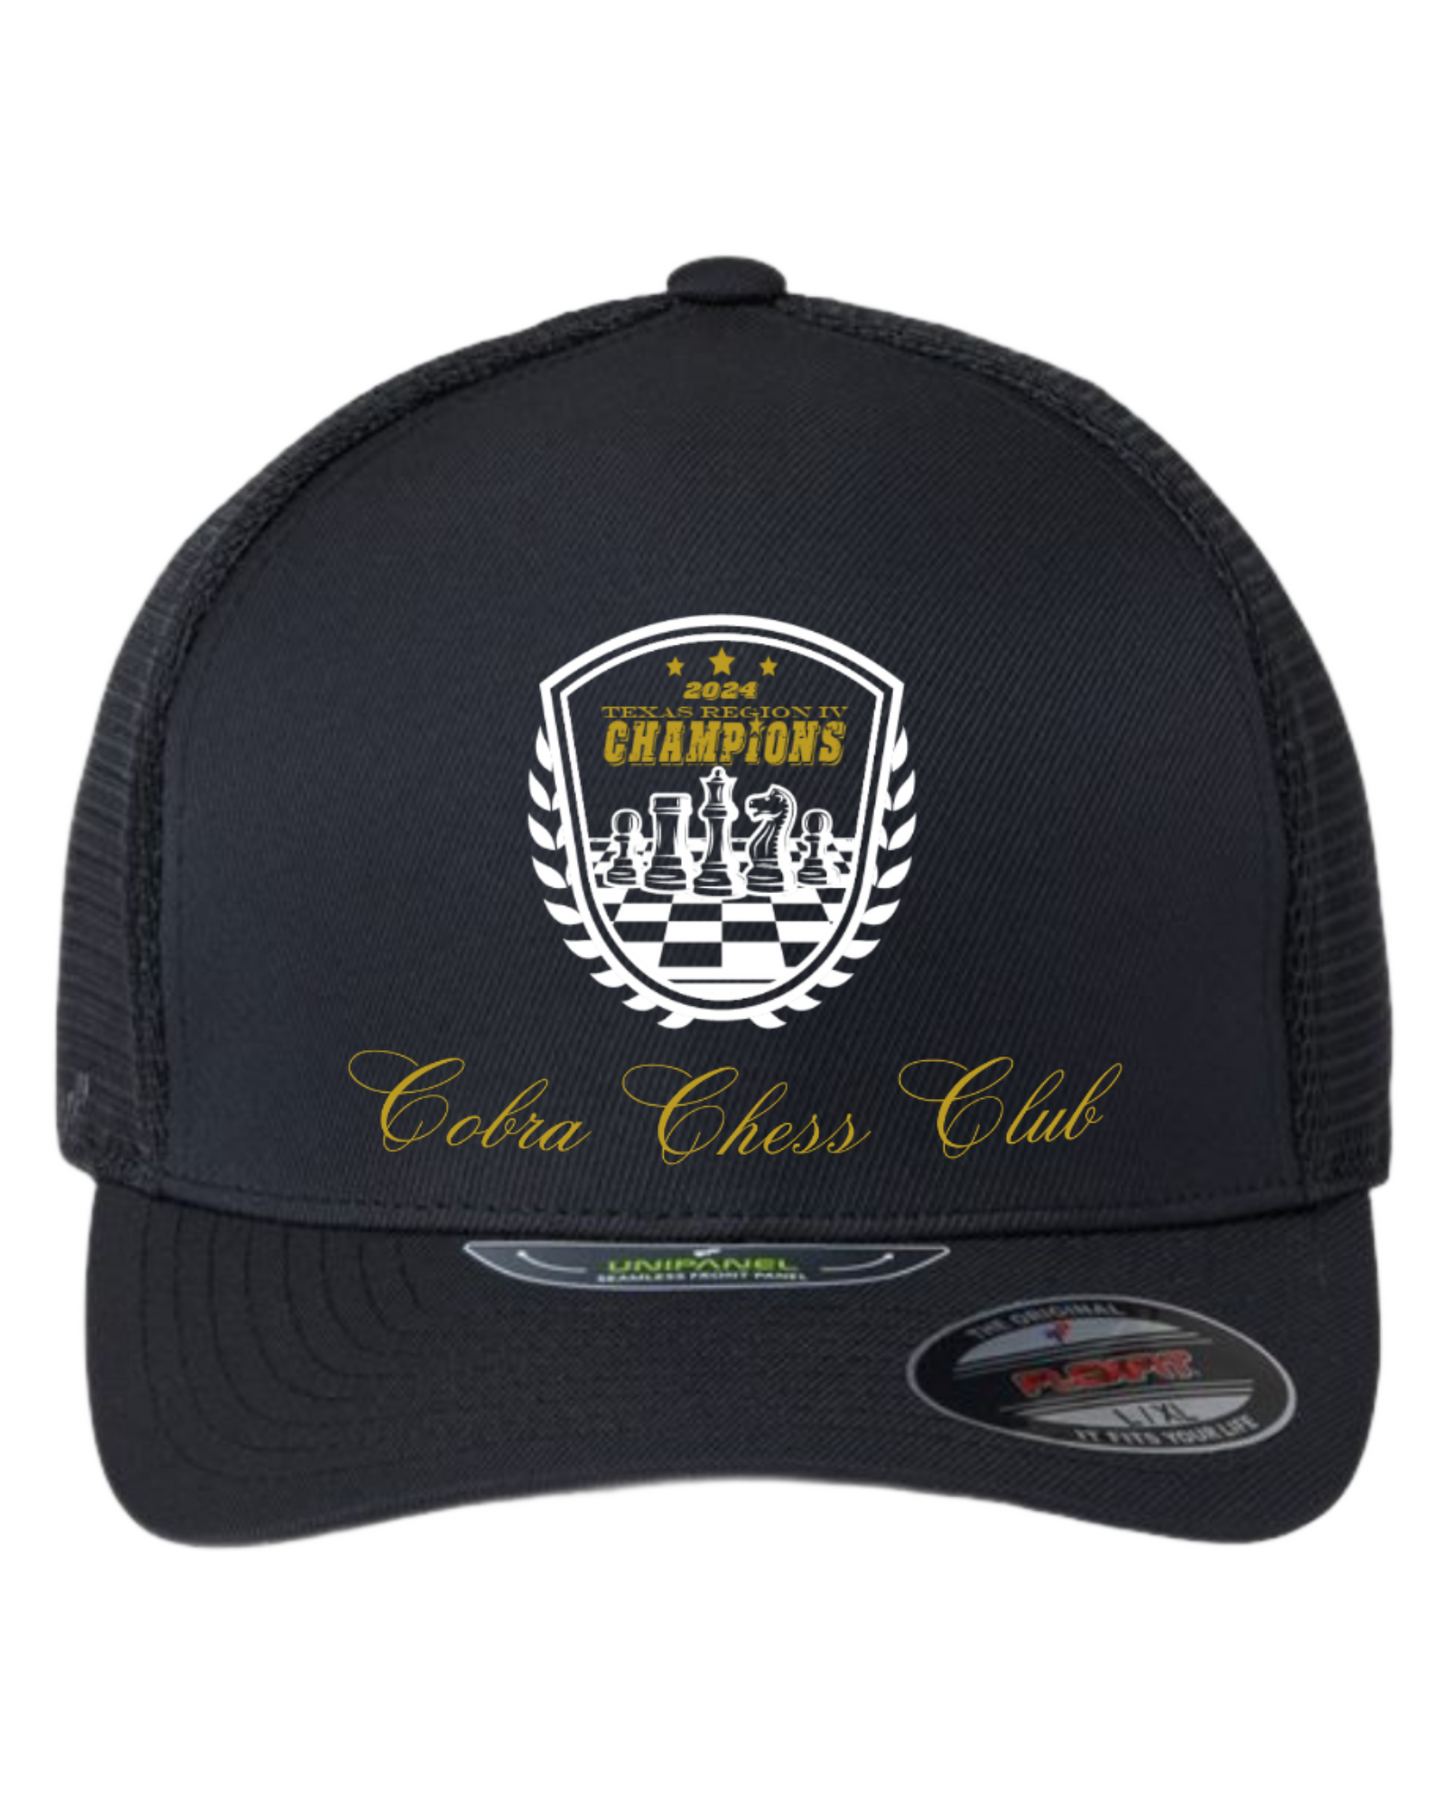 Cobra chess club CHAMPIONS caps